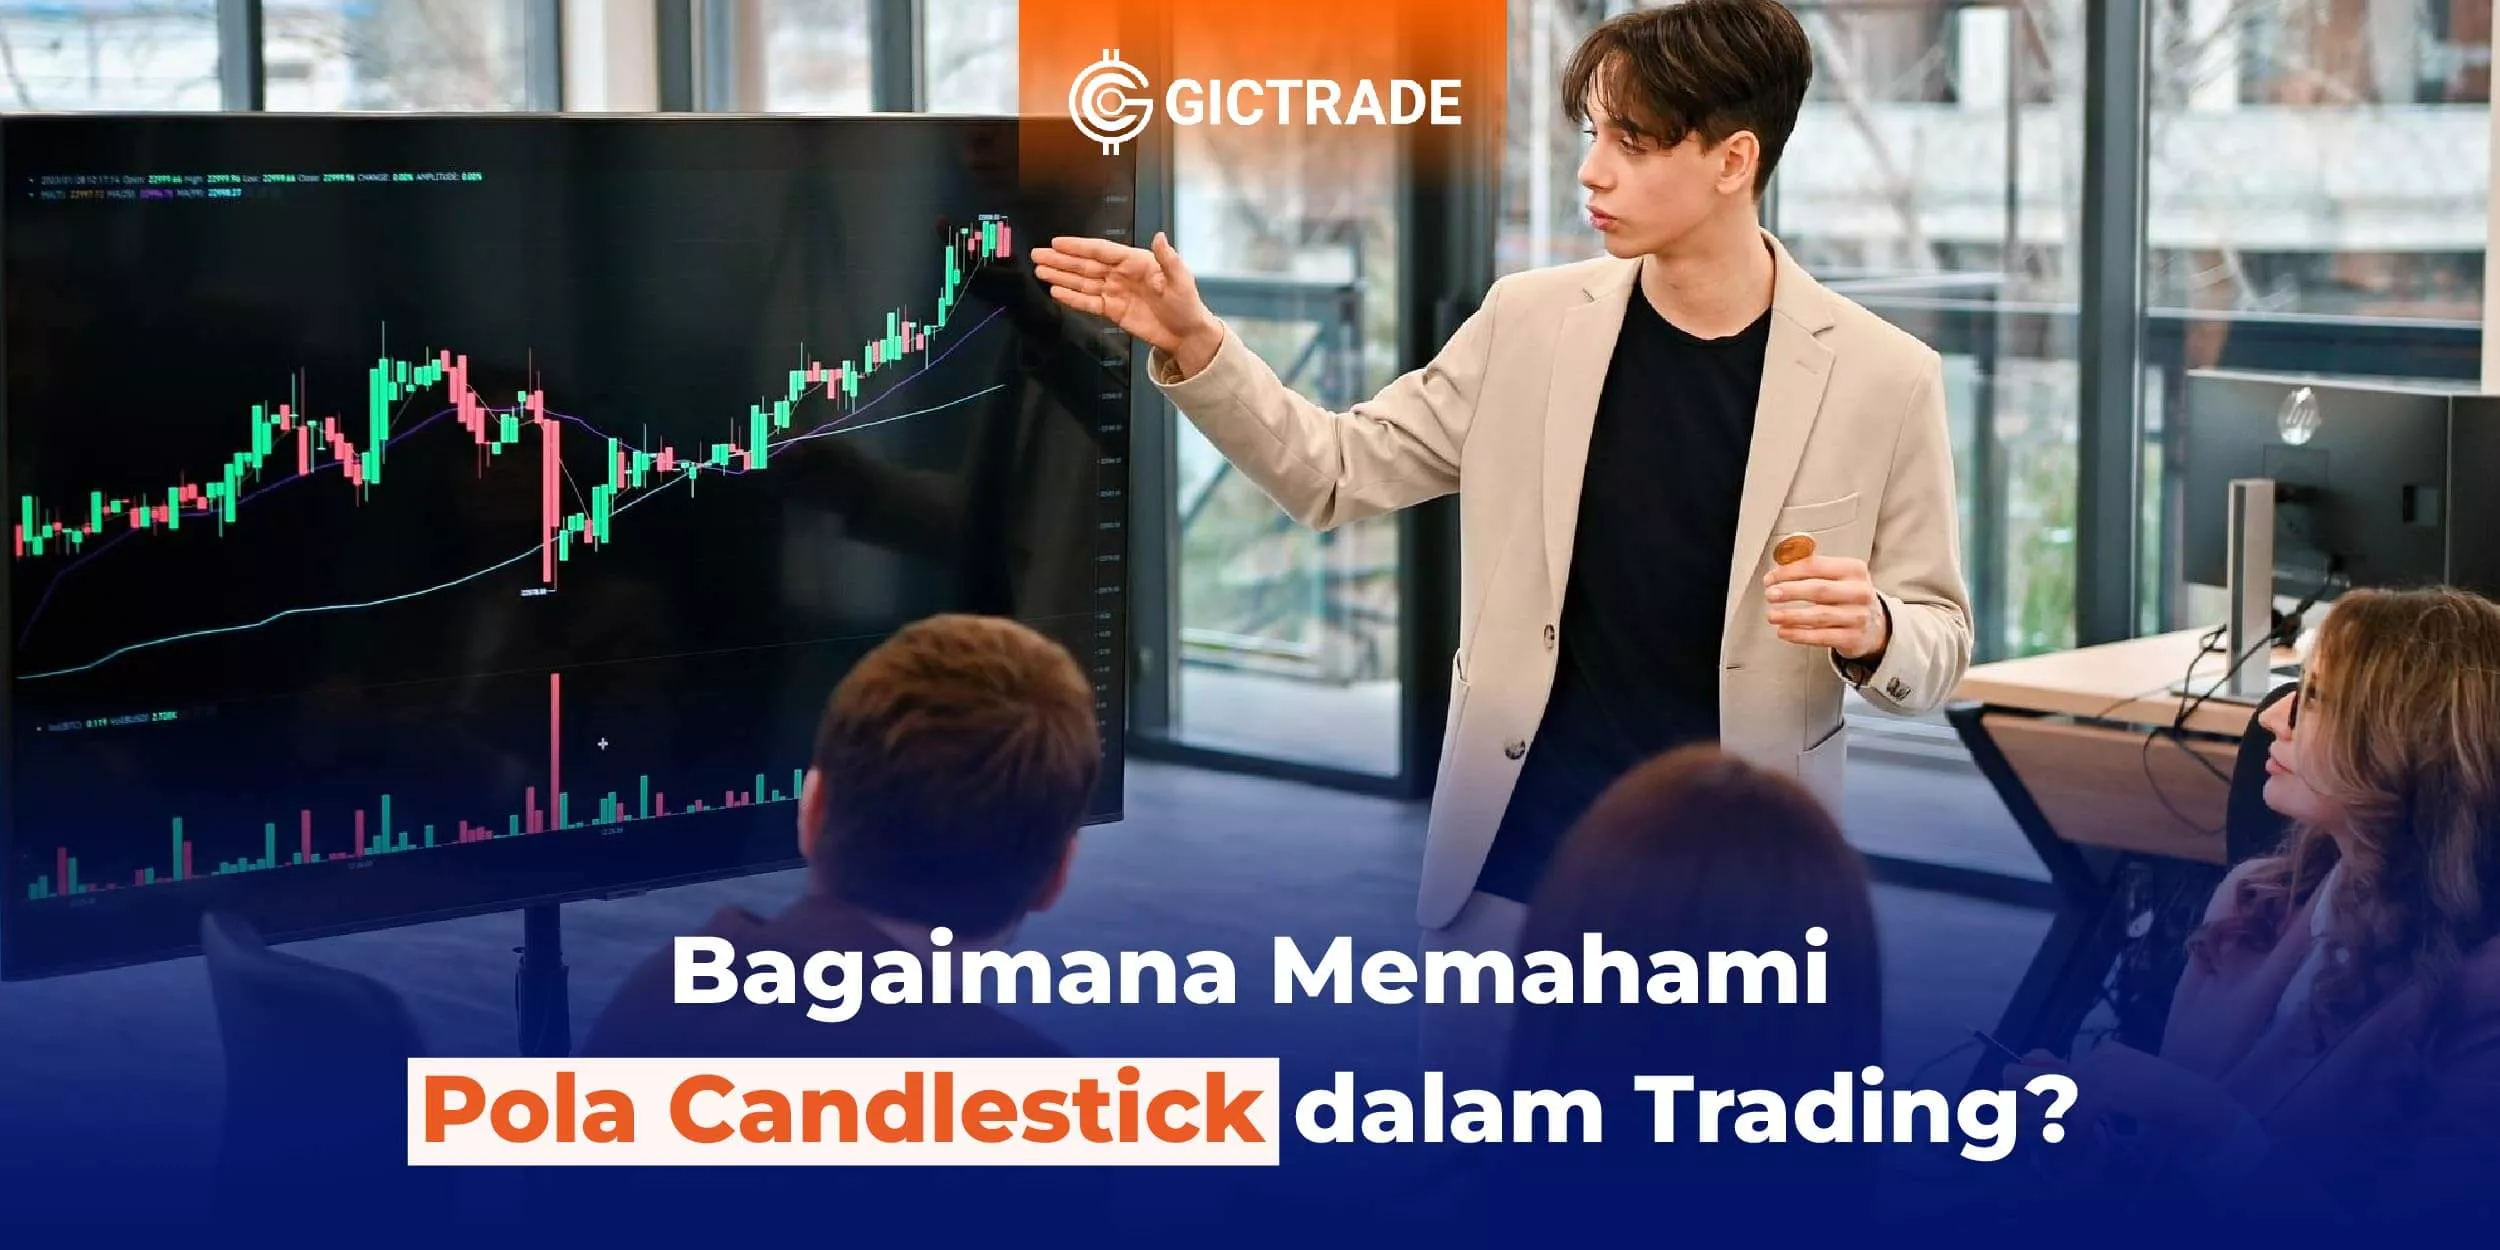 Memahami Pola Candlestick dalam Trading